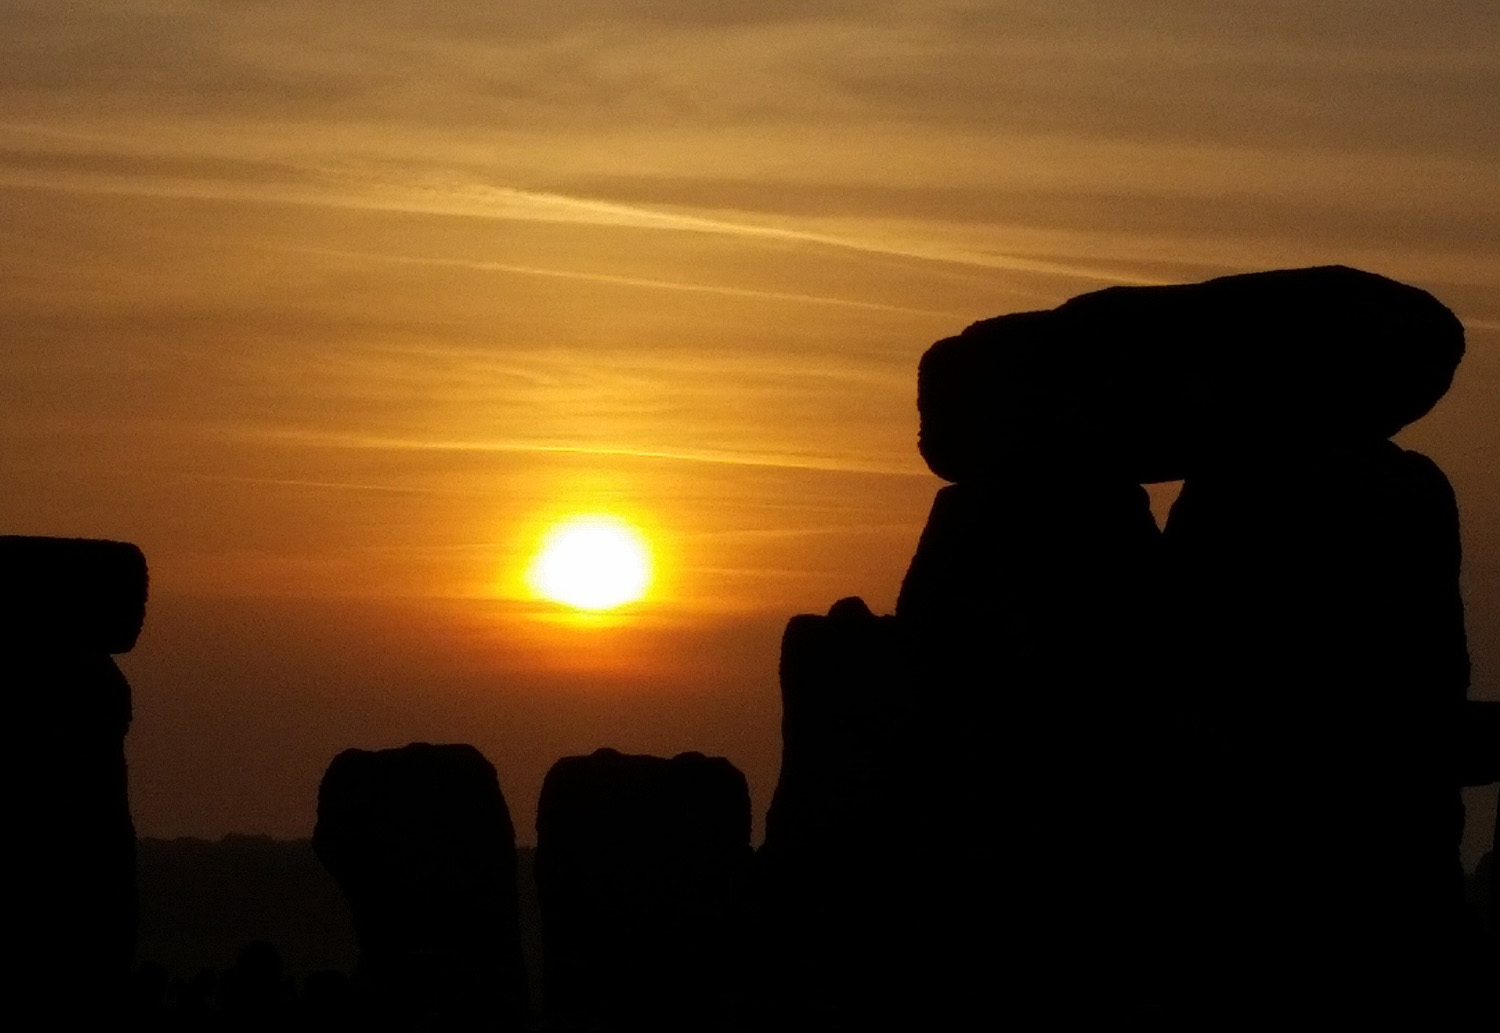 Stonehenge, England, June Solstice, 2017